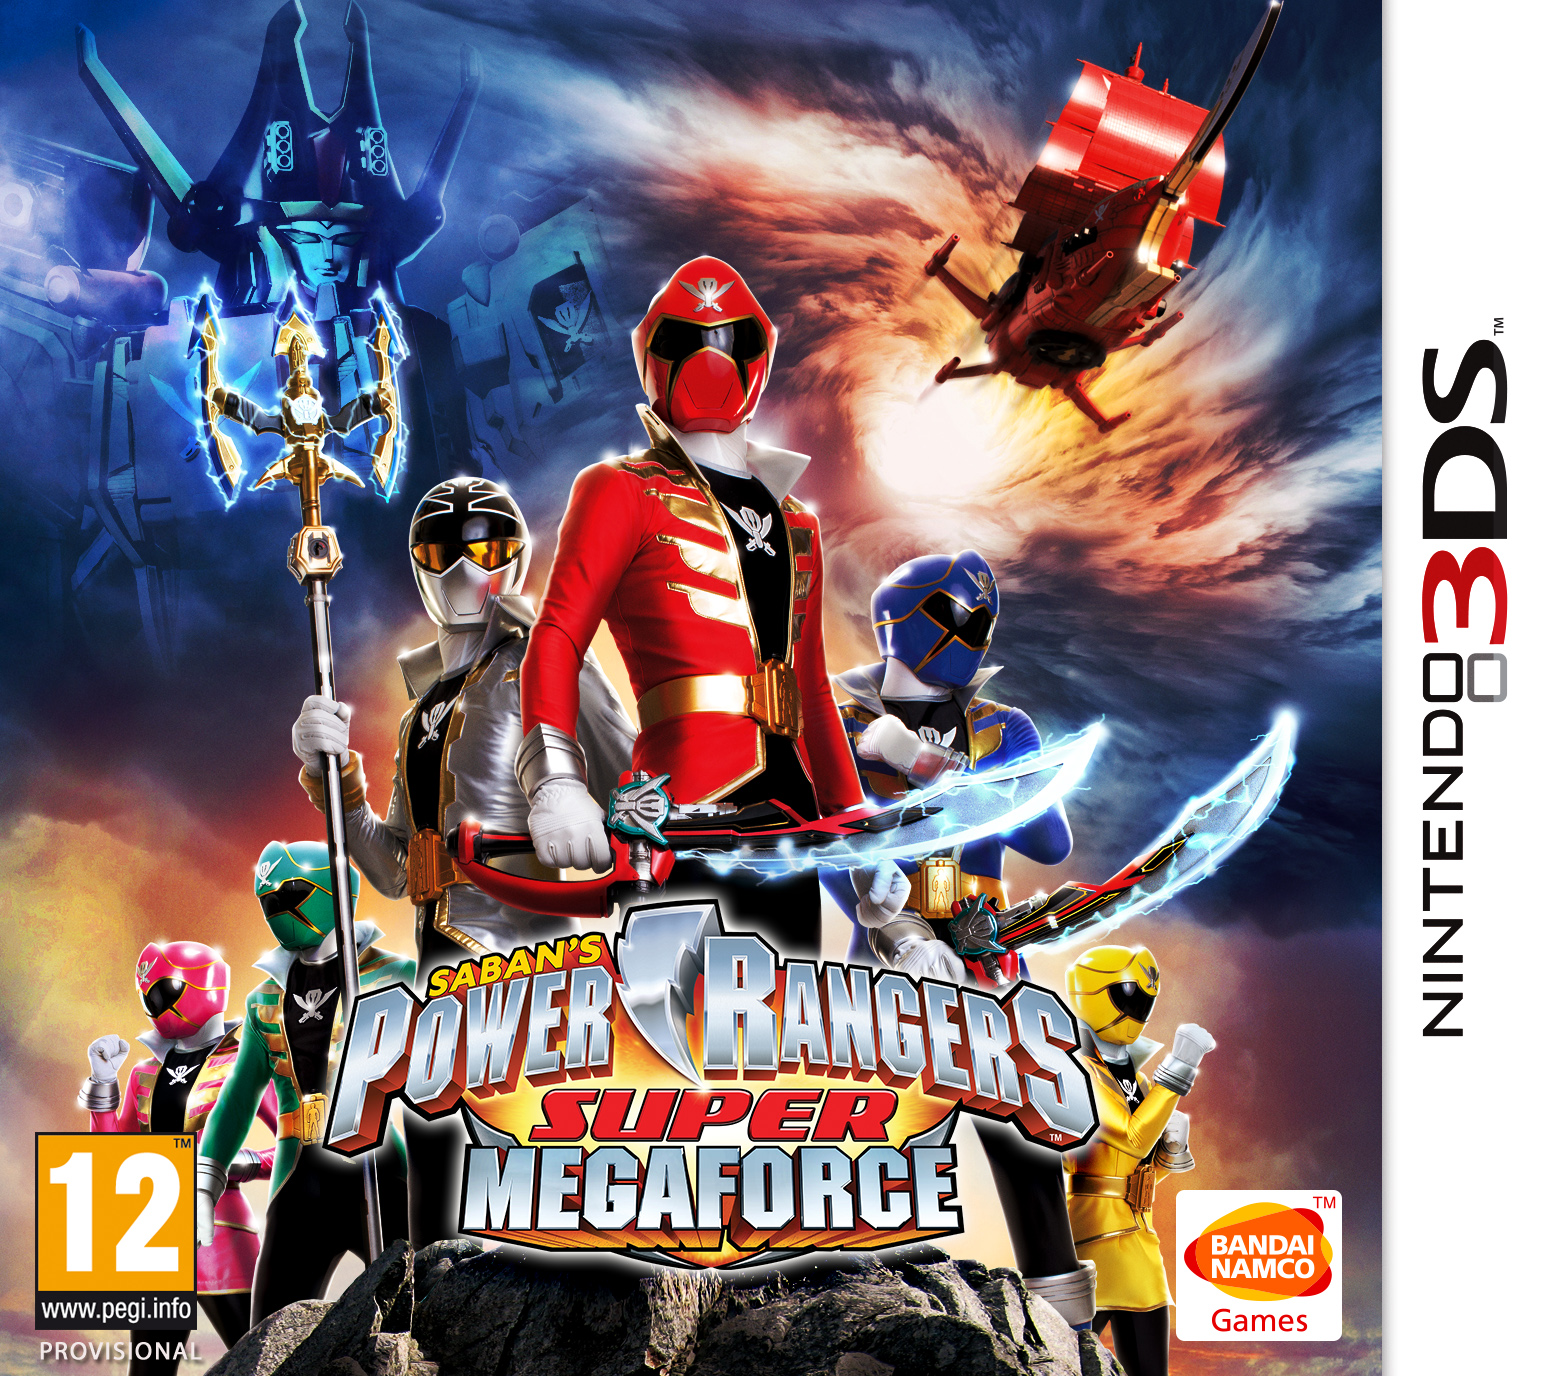 Bandai Namco Announce Power Rangers MegaForce Game